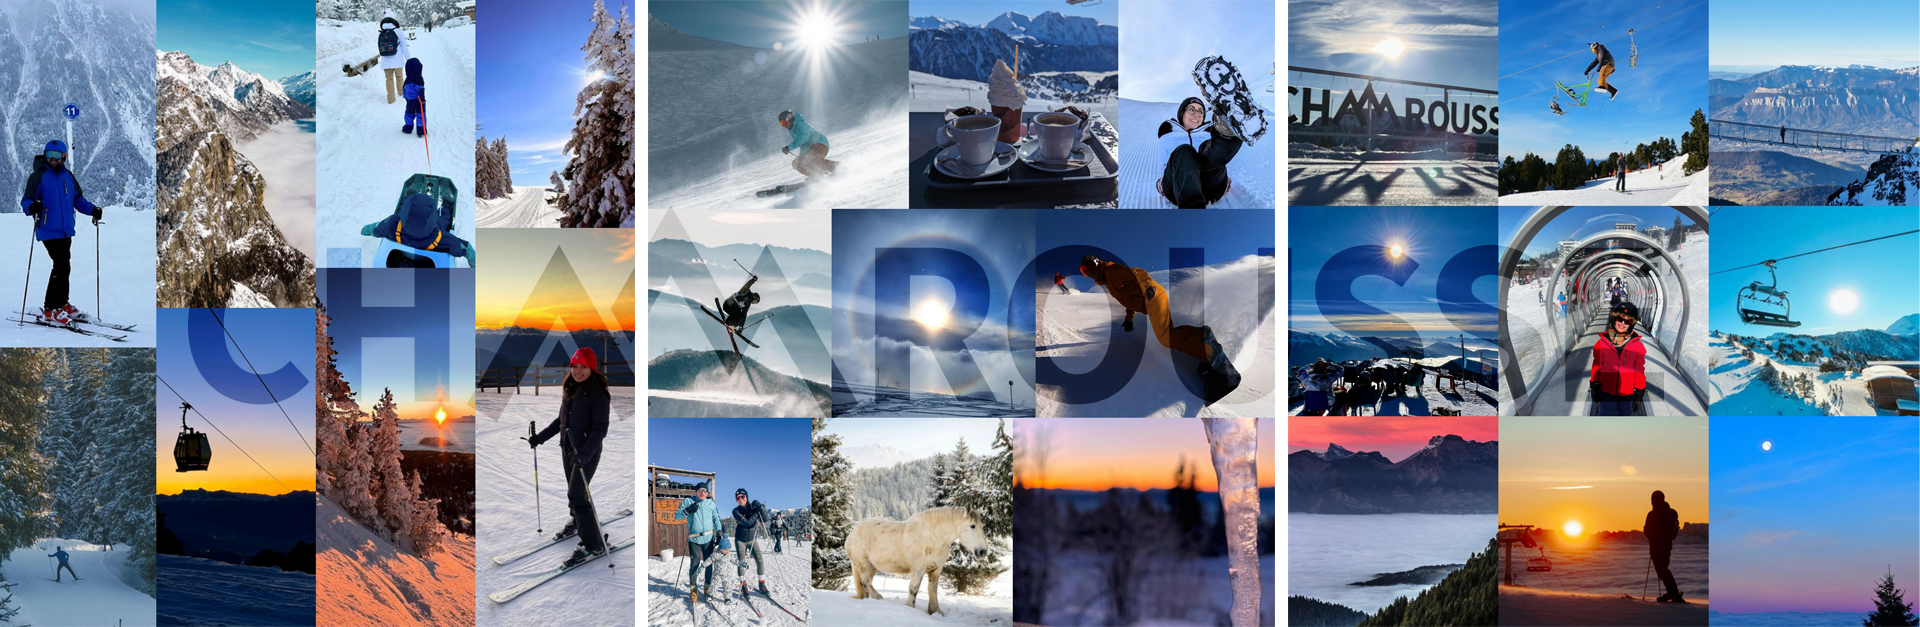 Chamrousse photo montage instagram memories facebook winter 2023-2024 ski resort mountain grenoble isere french alps france - © DR